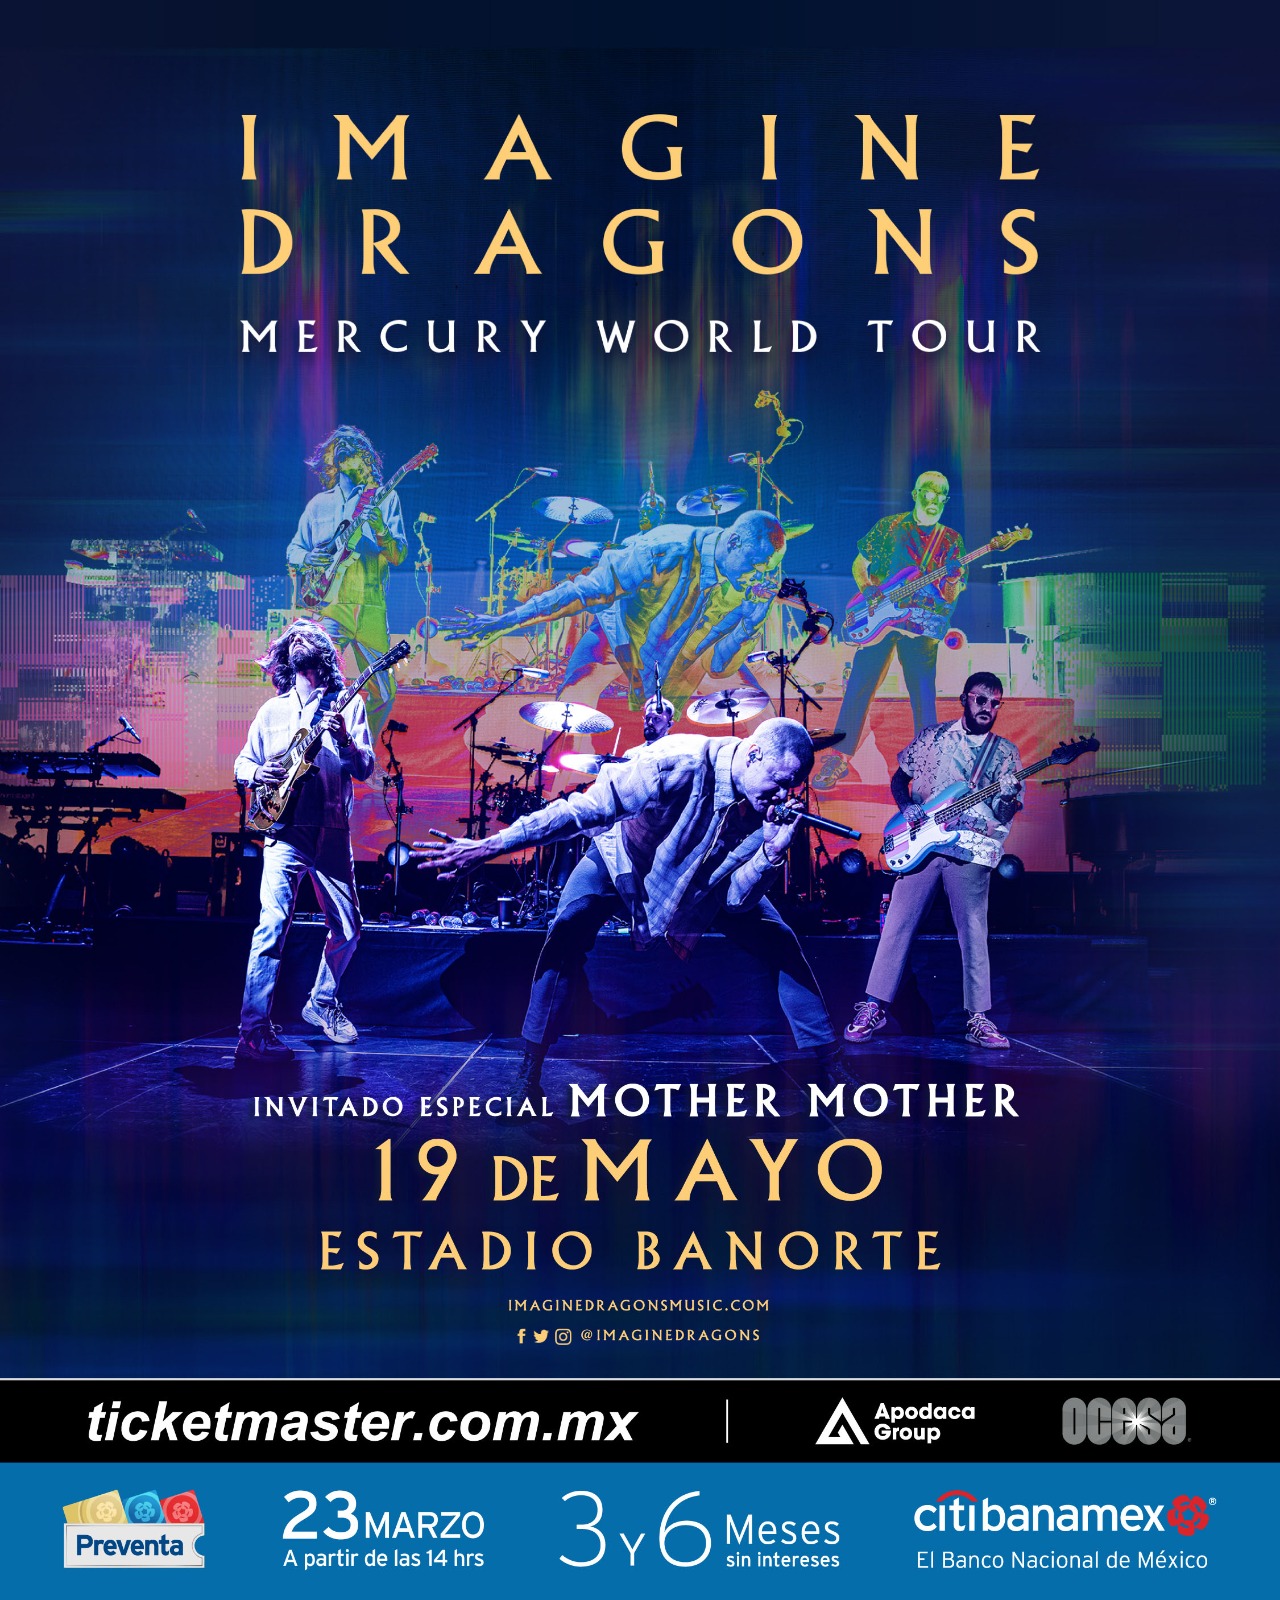 Imagine Dragons Llevará Su "Mercury World Tour" A Monterrey En Mayo